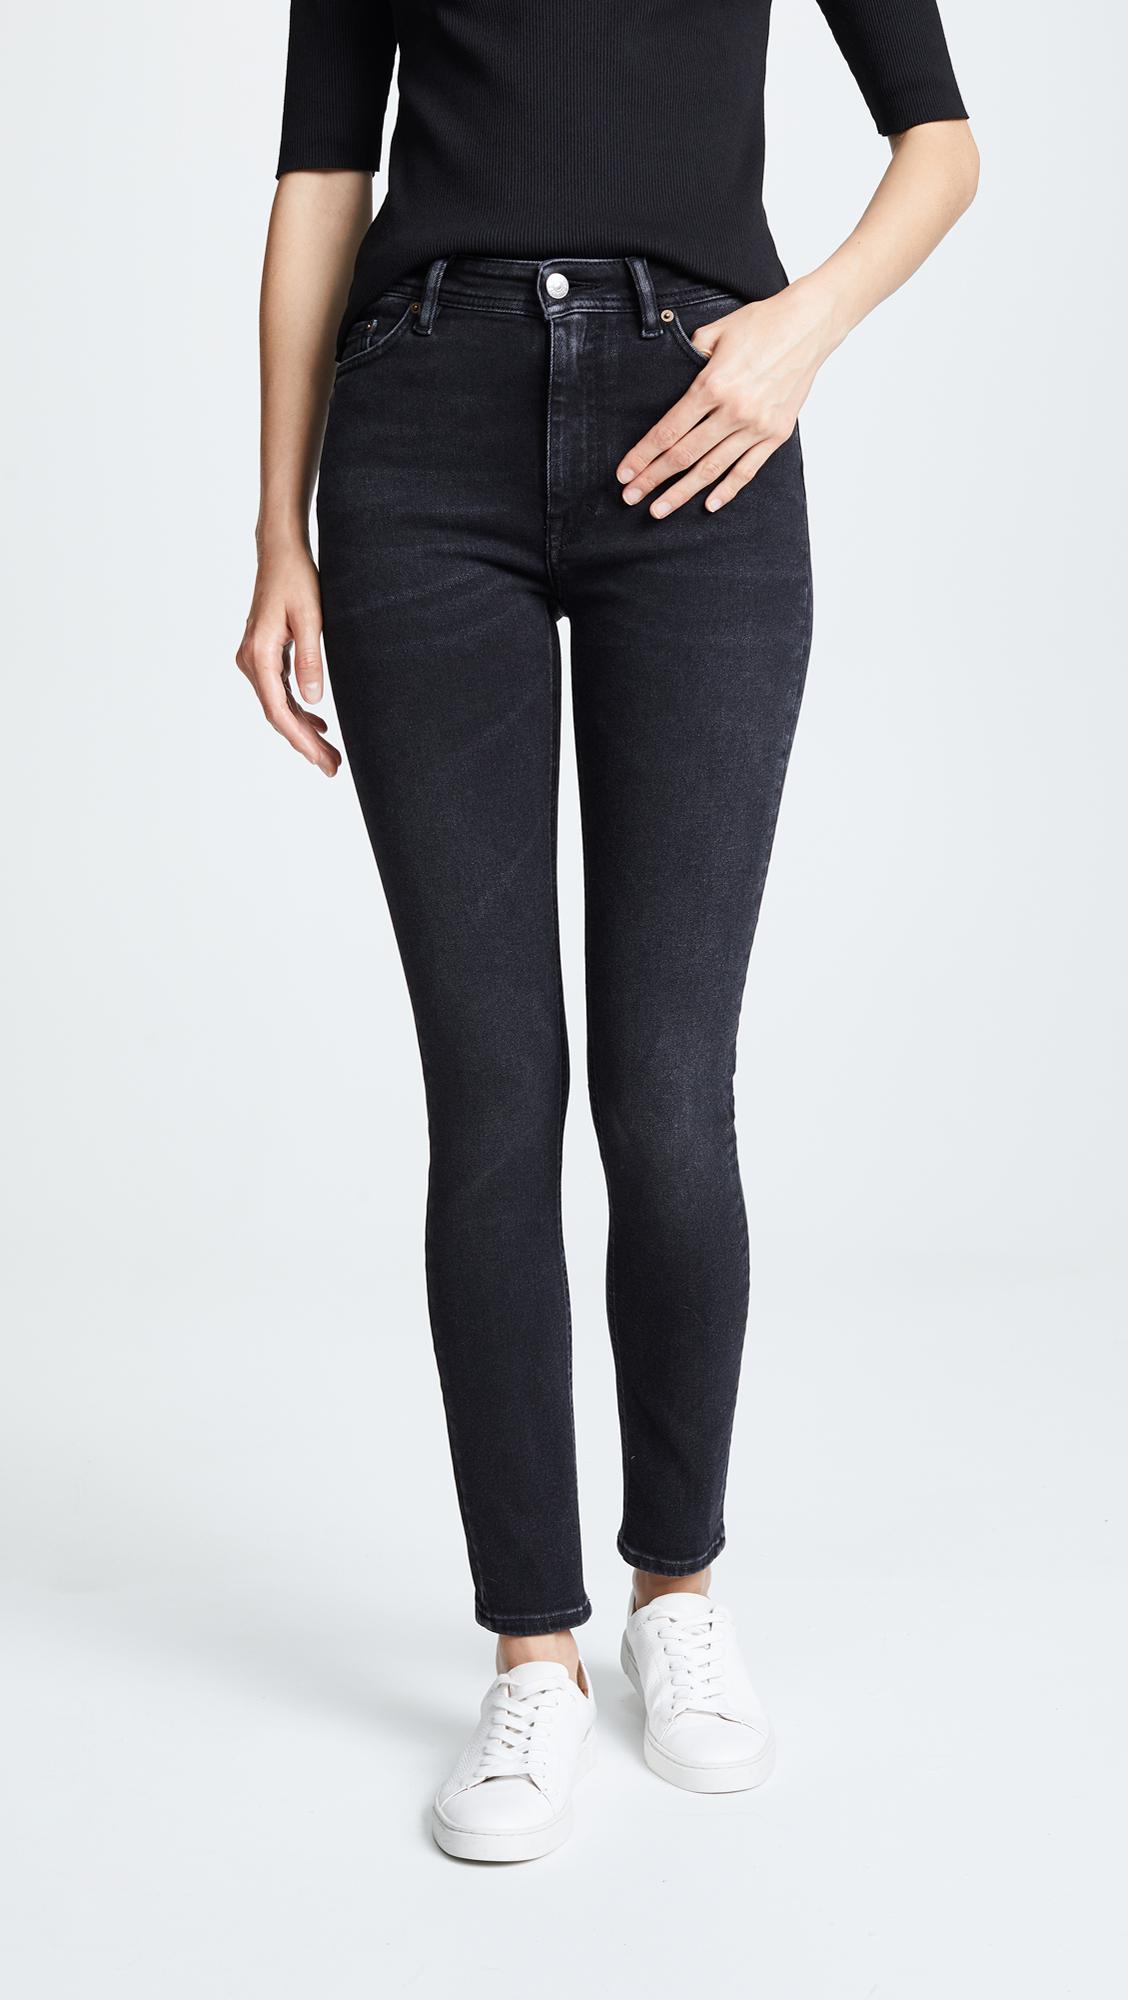 Acne Studios Denim Peg Jeans in Black - Lyst